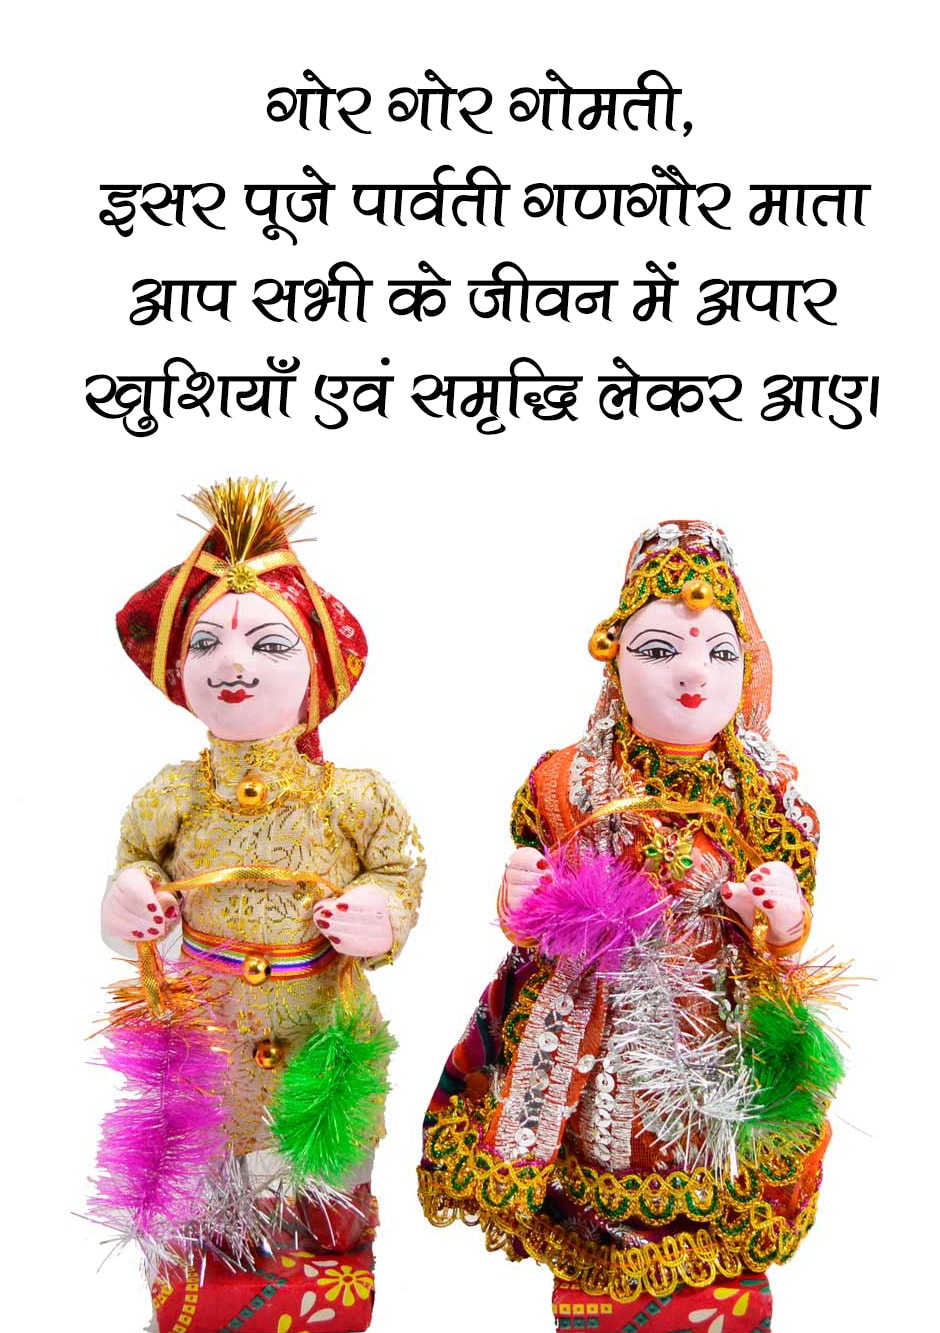 Happy Gangaur Wishes Images 